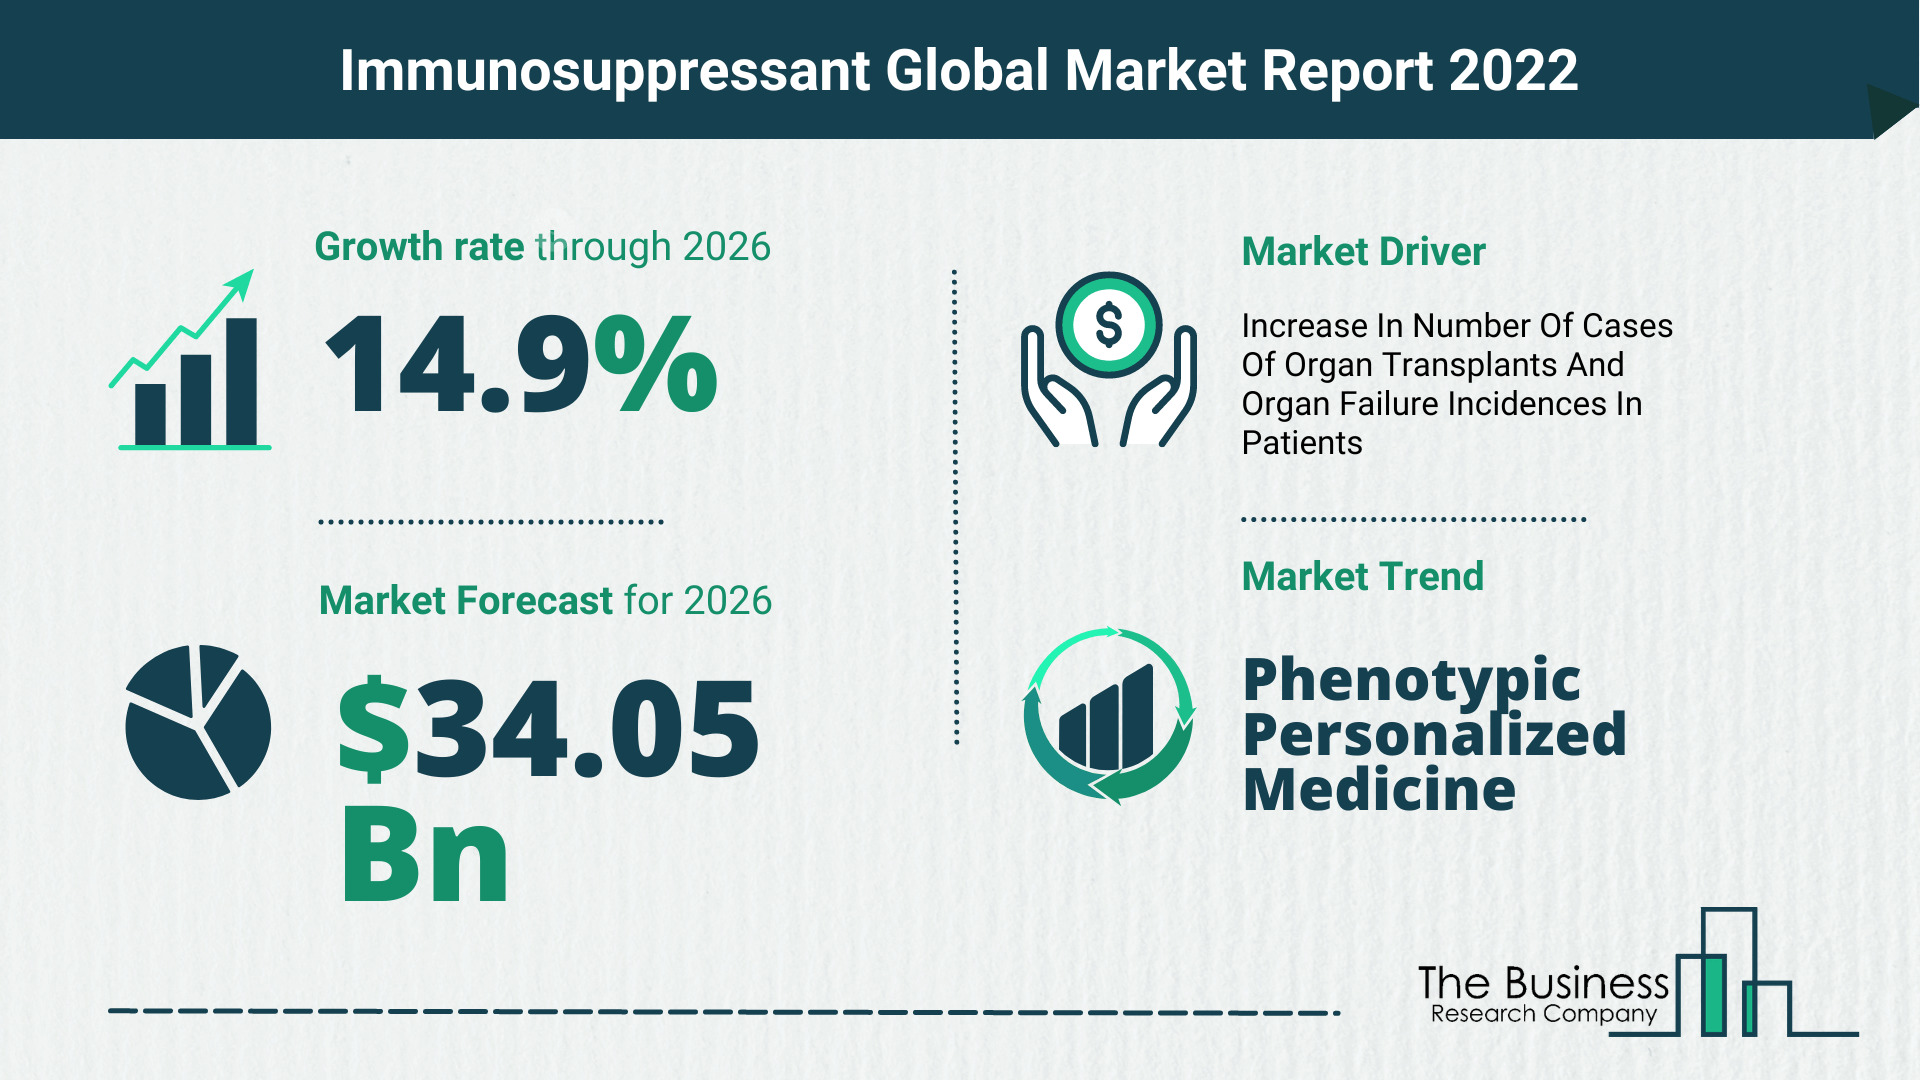 Global Immunosuppressant Market